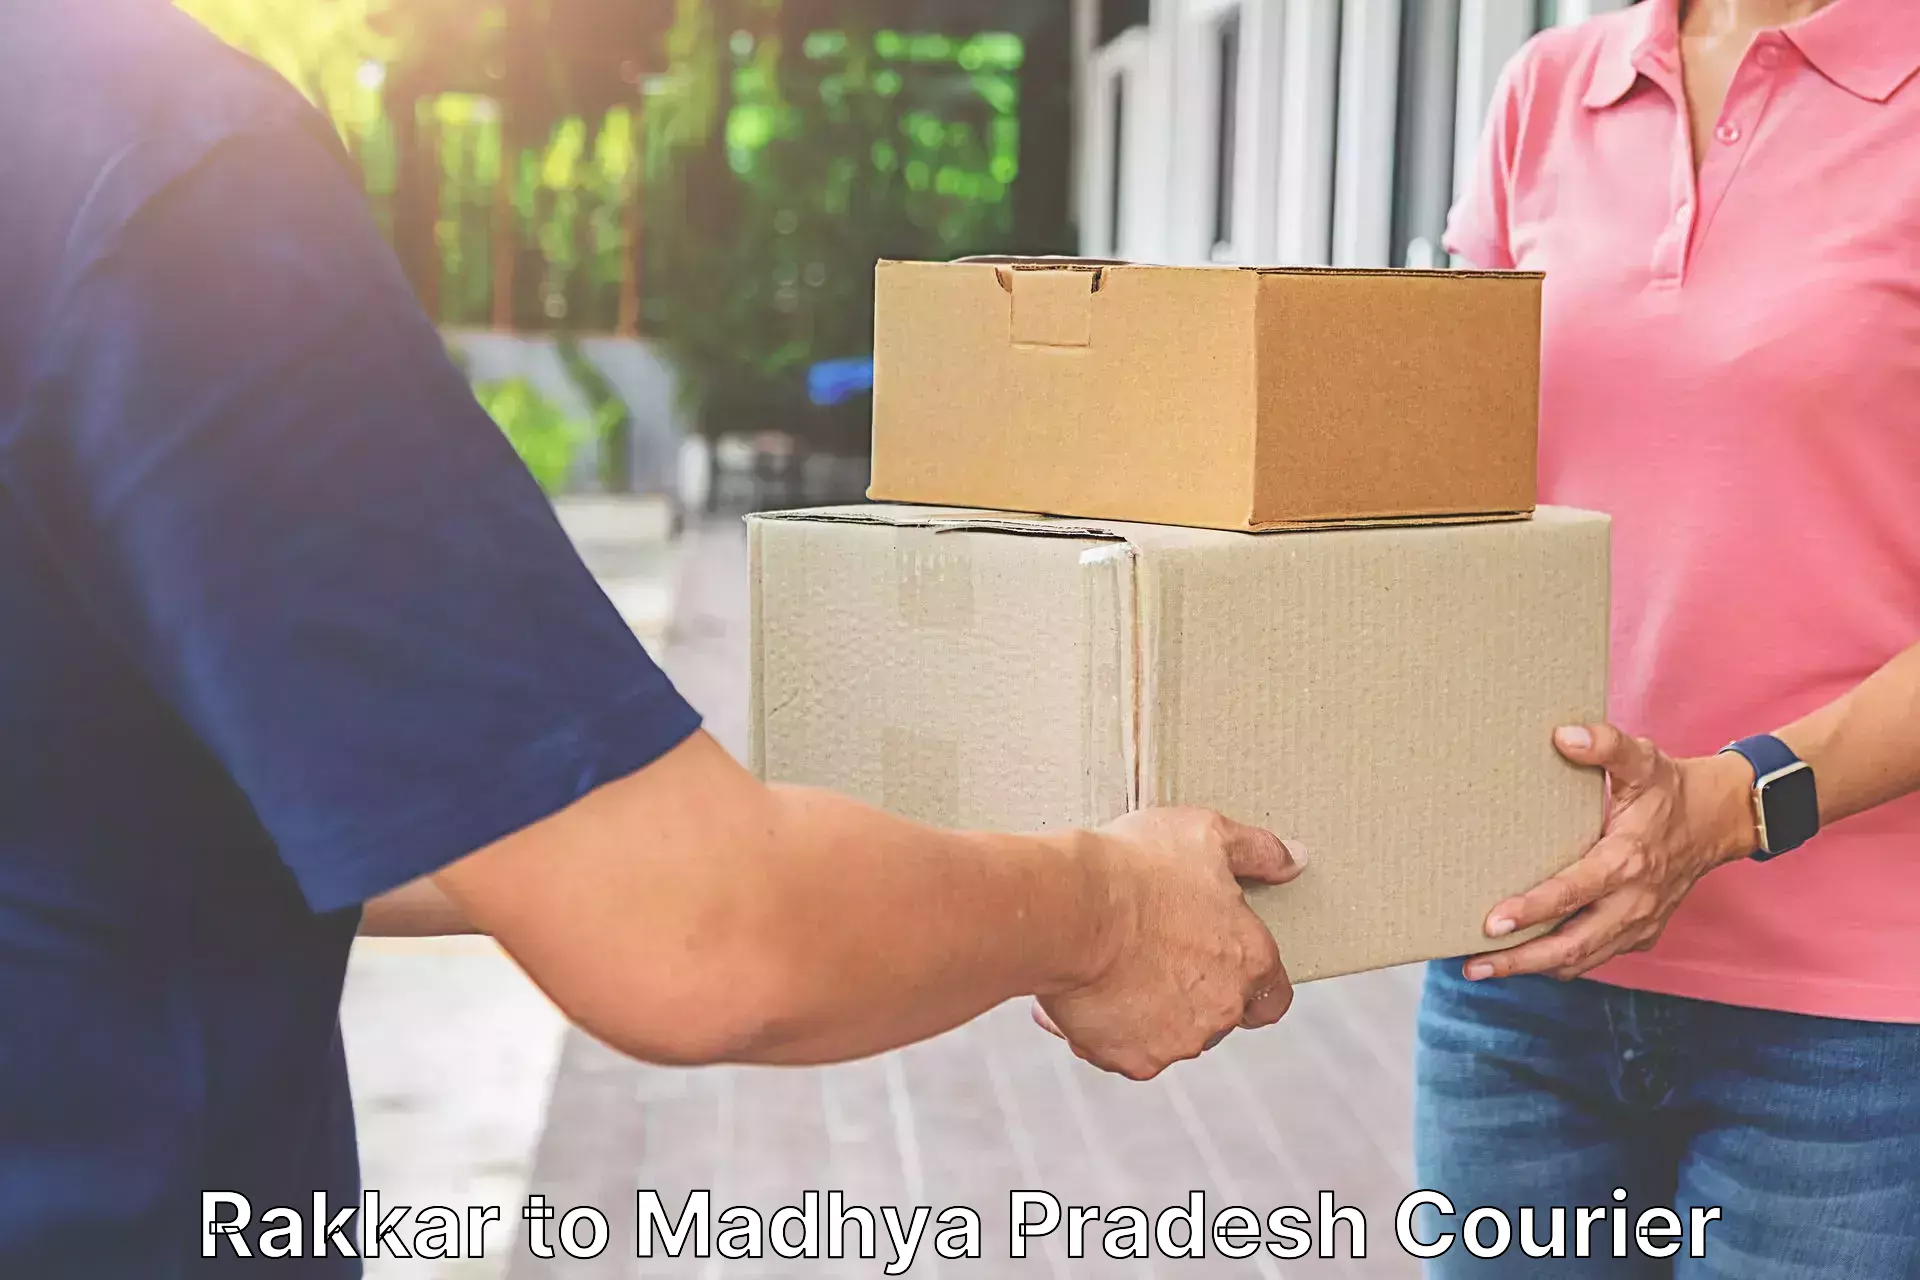 Individual parcel service Rakkar to Madwas